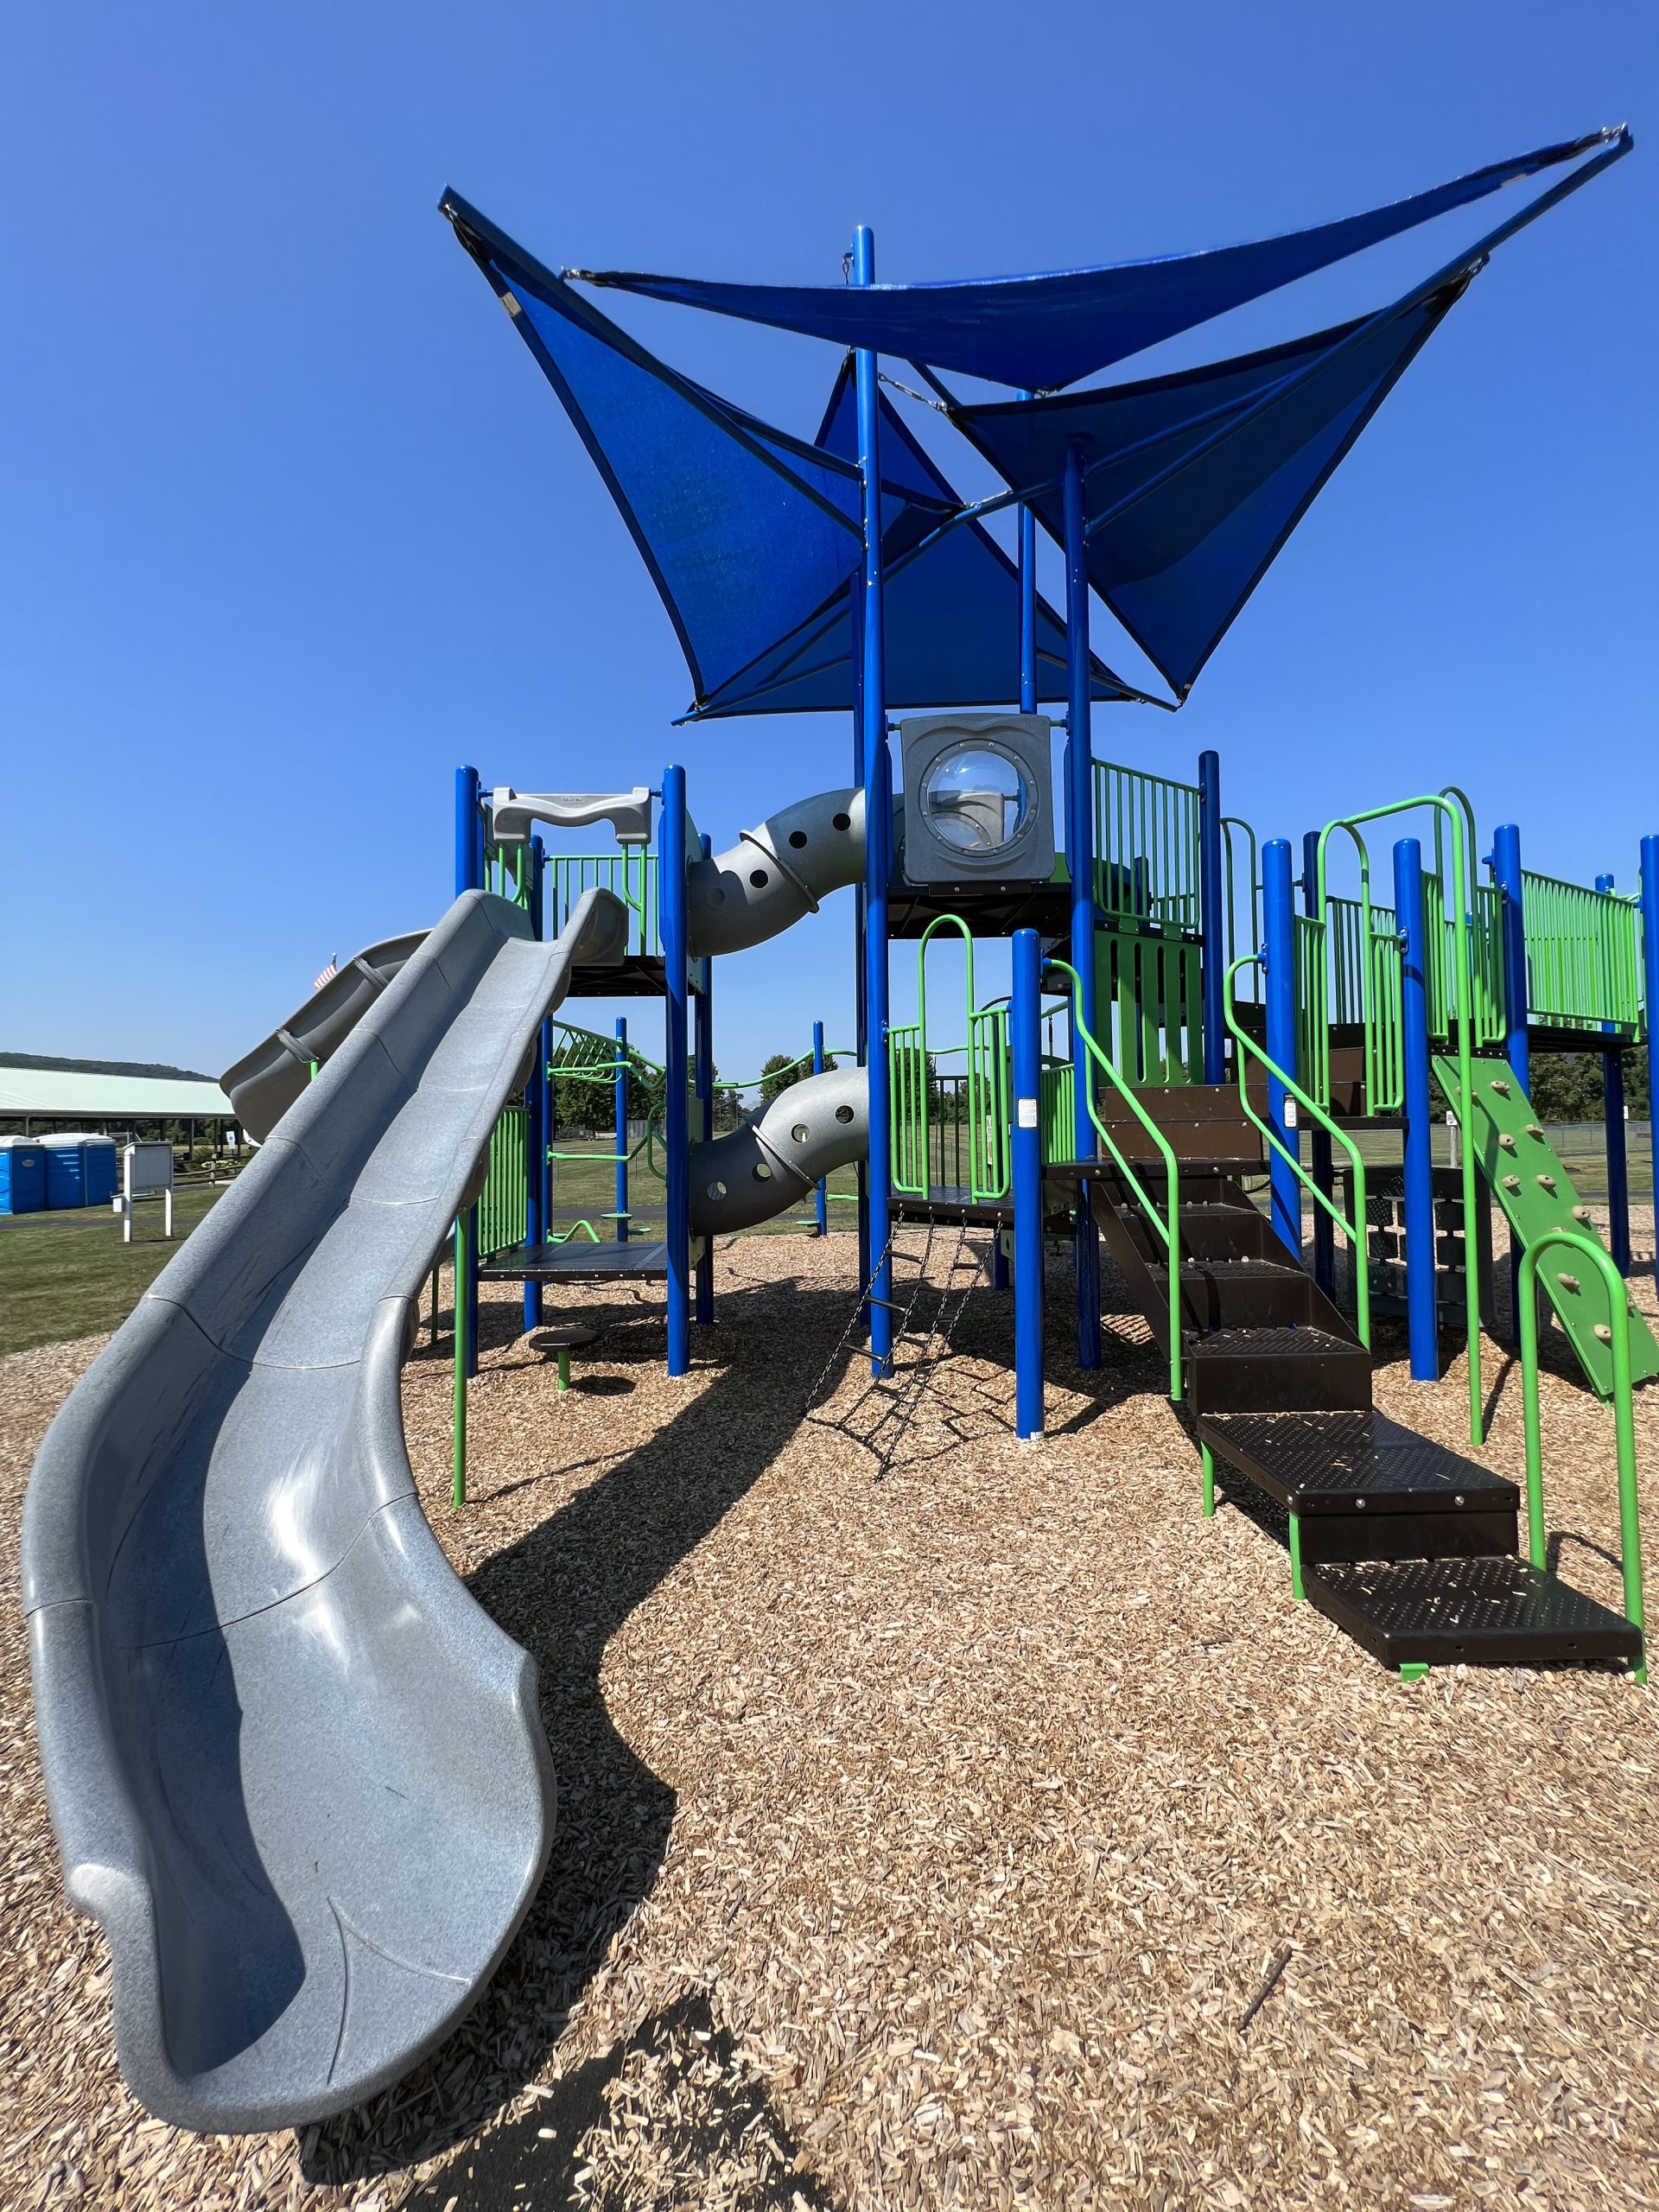 SLIDES - Open slightly curvy at bottom slide 1 At Heritage Park Playground in Asbury NJ